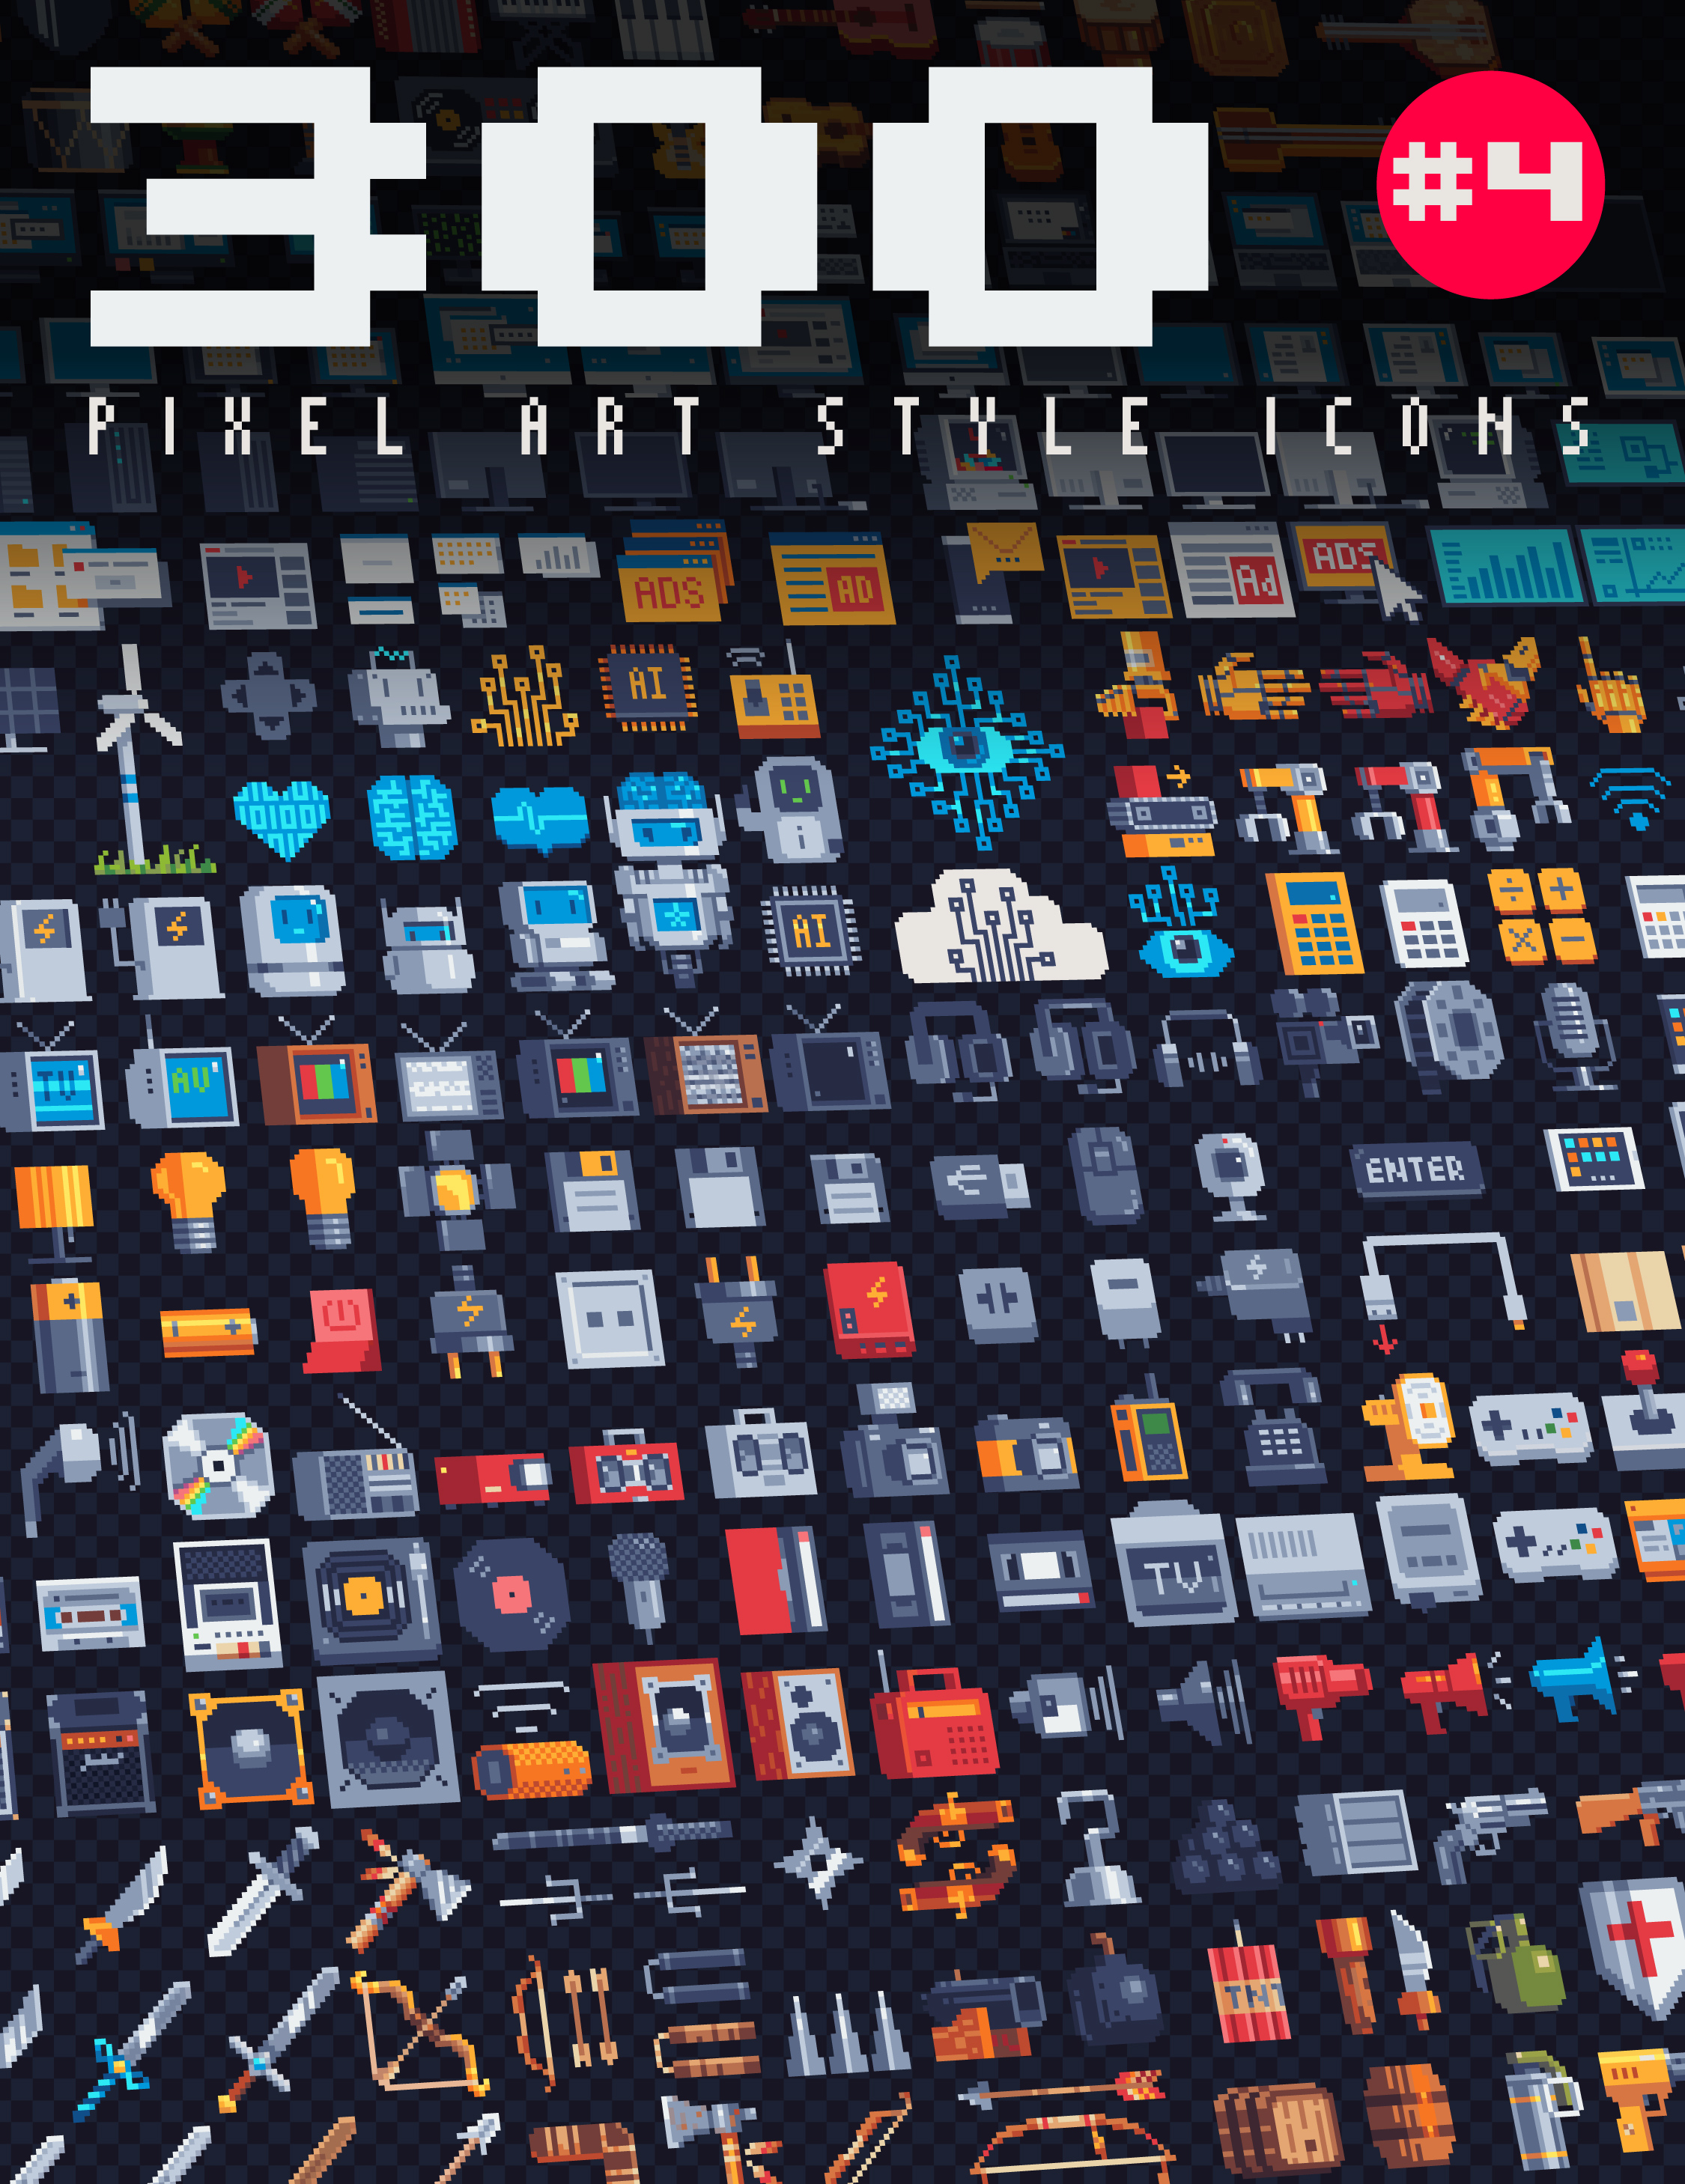 300 - Pixel Art Style Icons #4 by VectorPixelStar